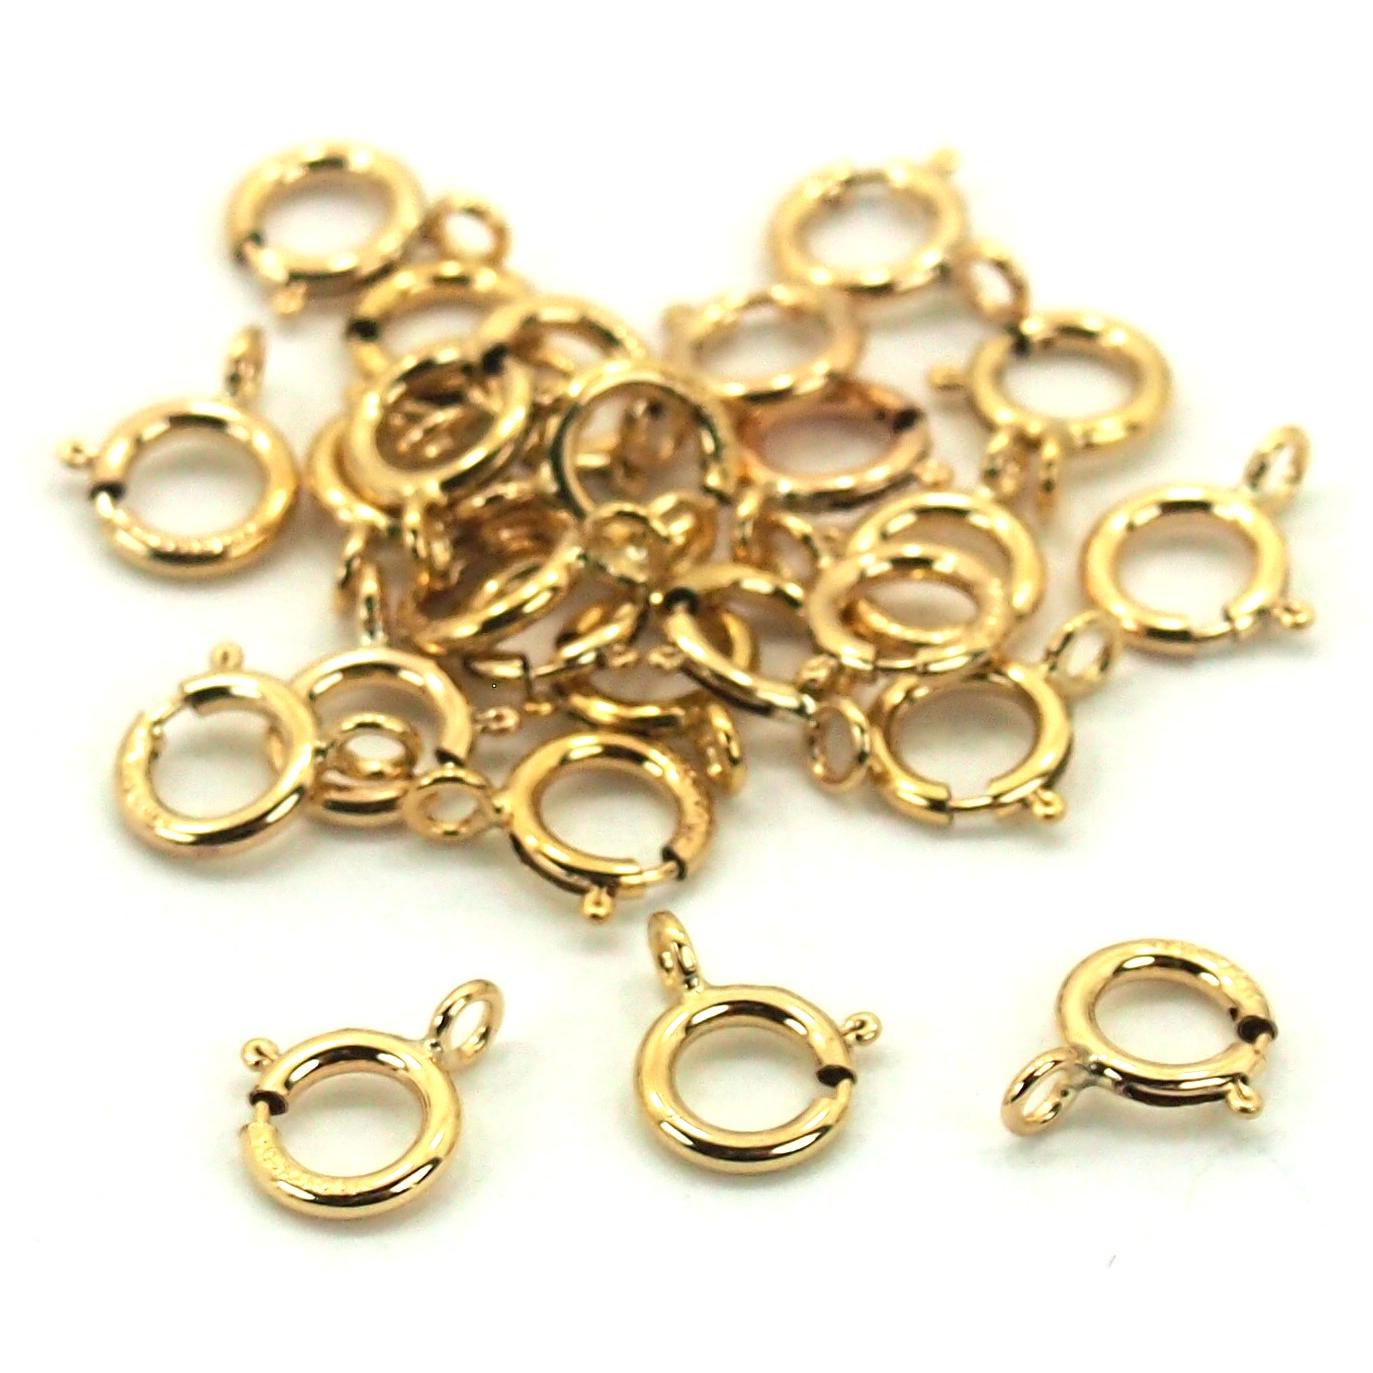 Spring Ring Clasp 14k Gold Filled 5.5mm 25Pcs